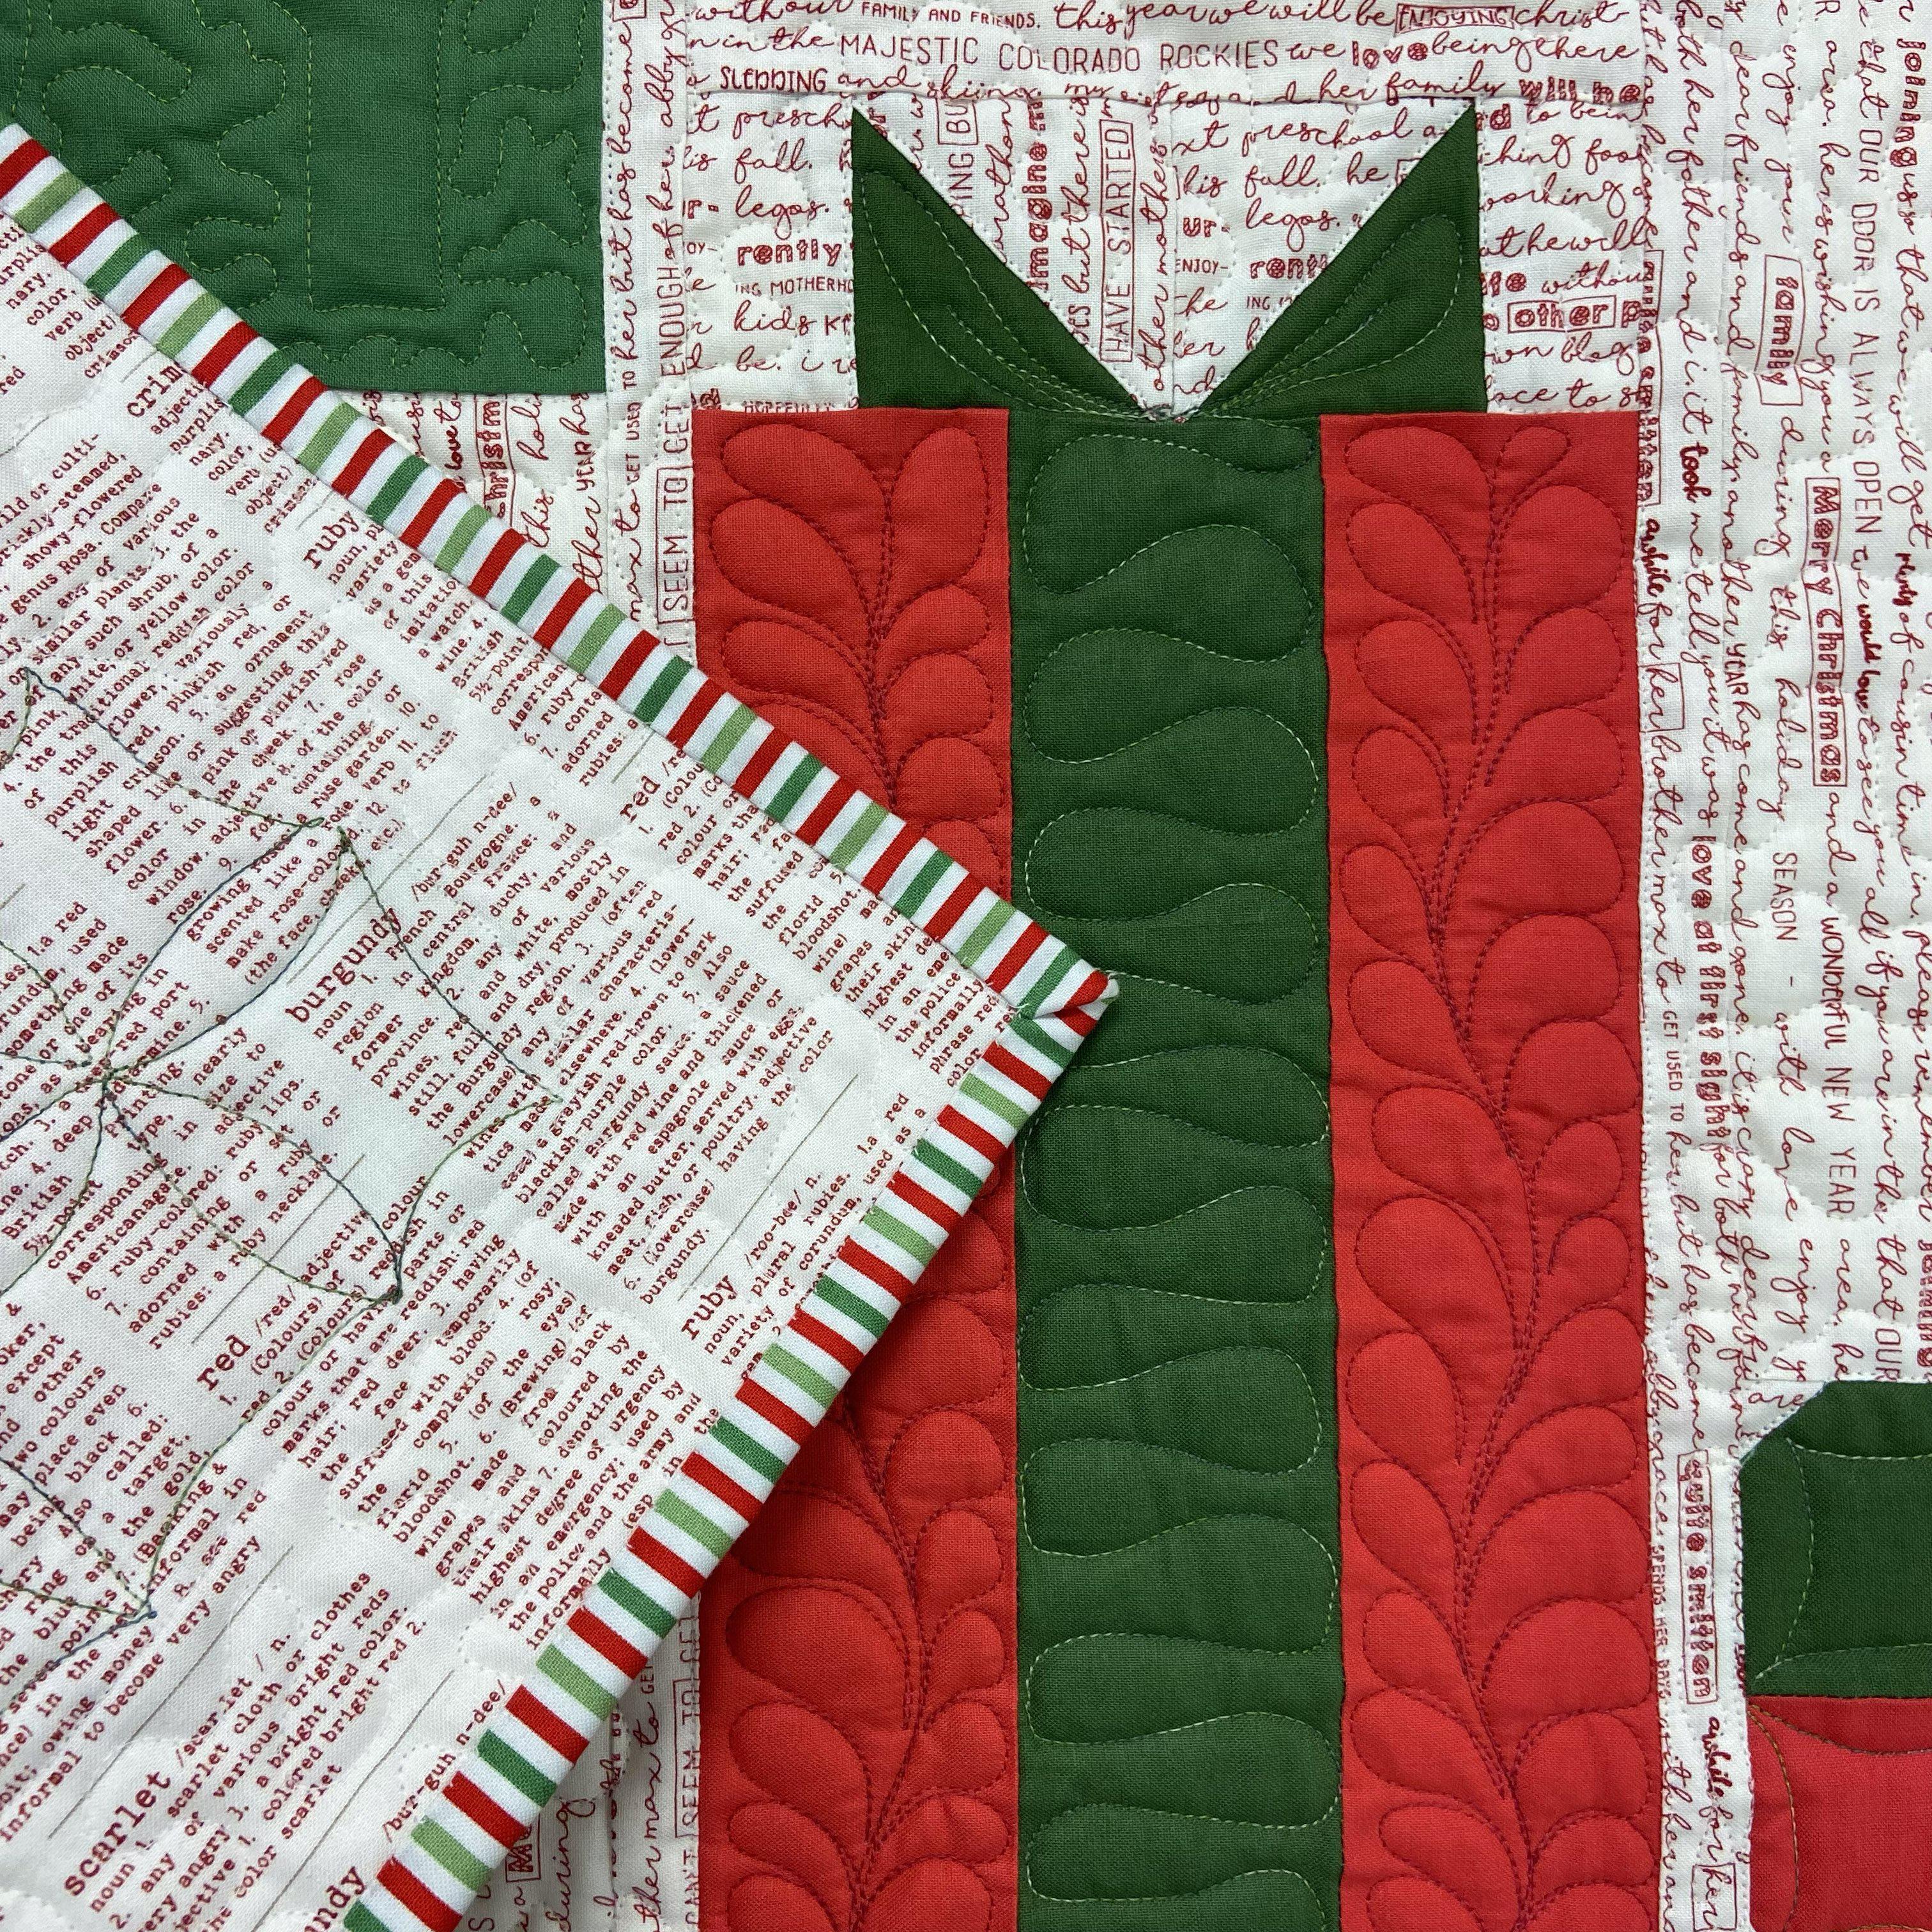 Crayola Christmas Table Runner - Free Digital Download-Riley Blake Fabrics-My Favorite Quilt Store